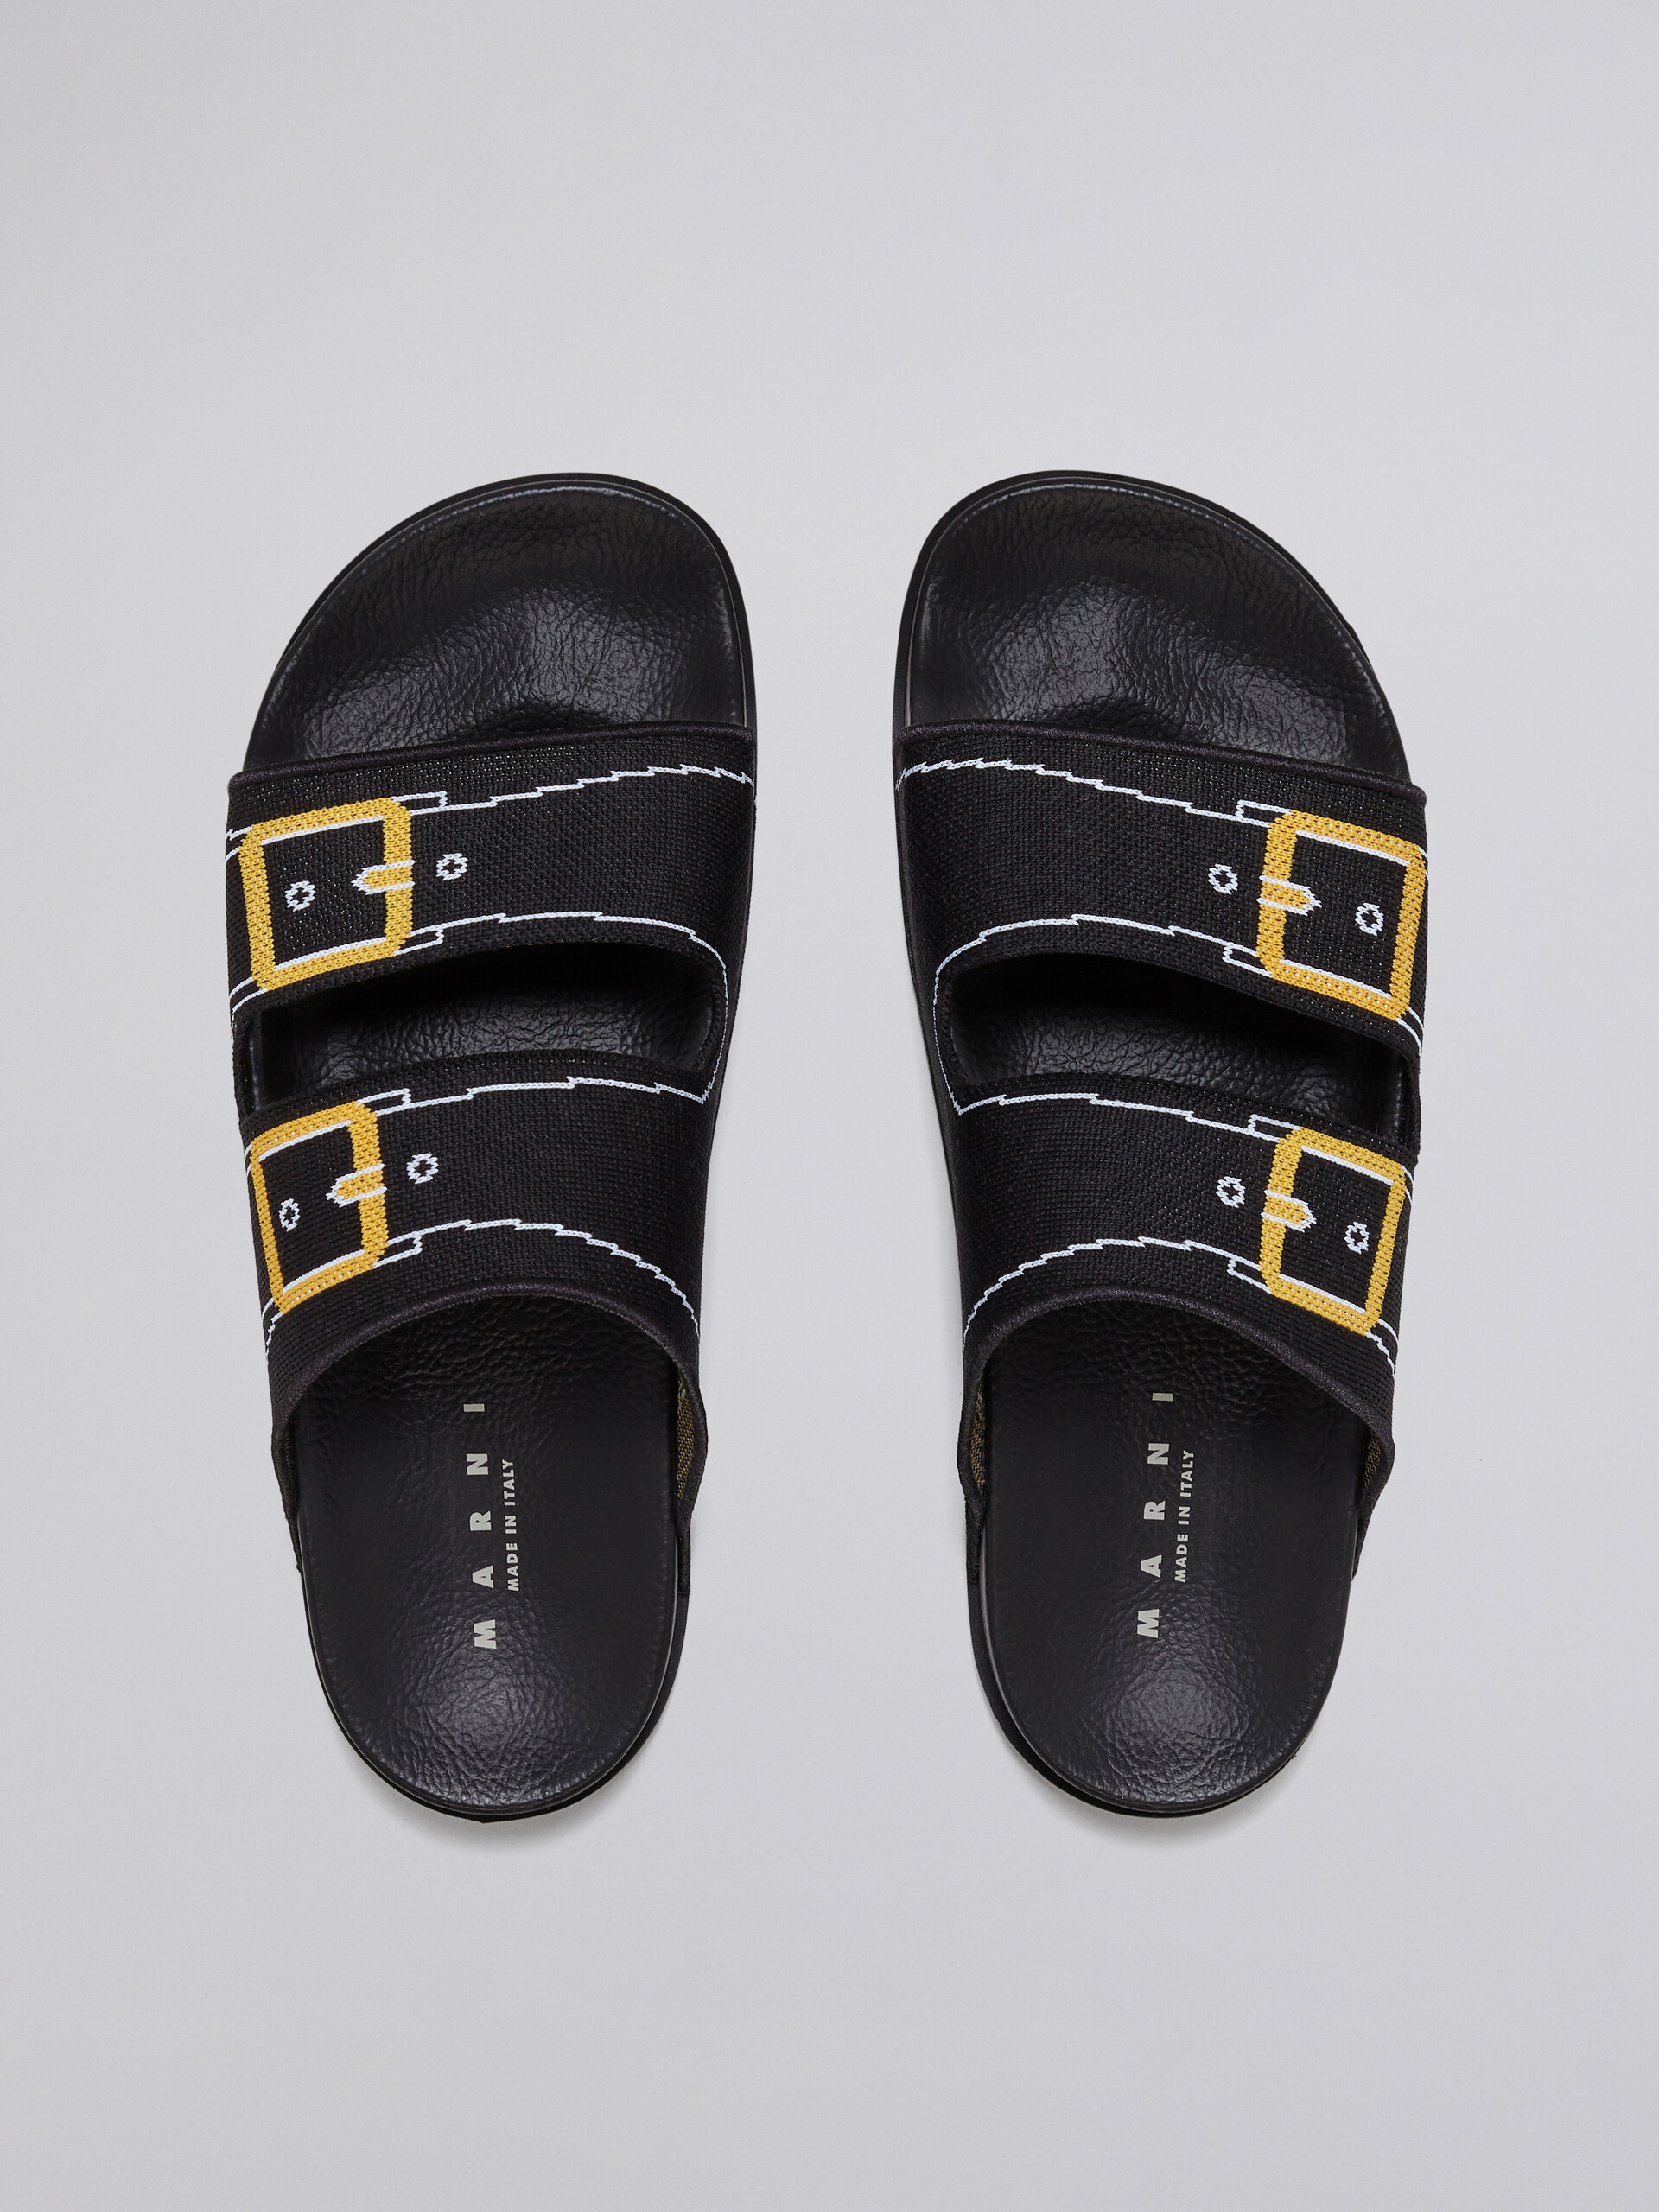 Black trompe l'œil jacquard two-strap slide - Sandals - Image 4